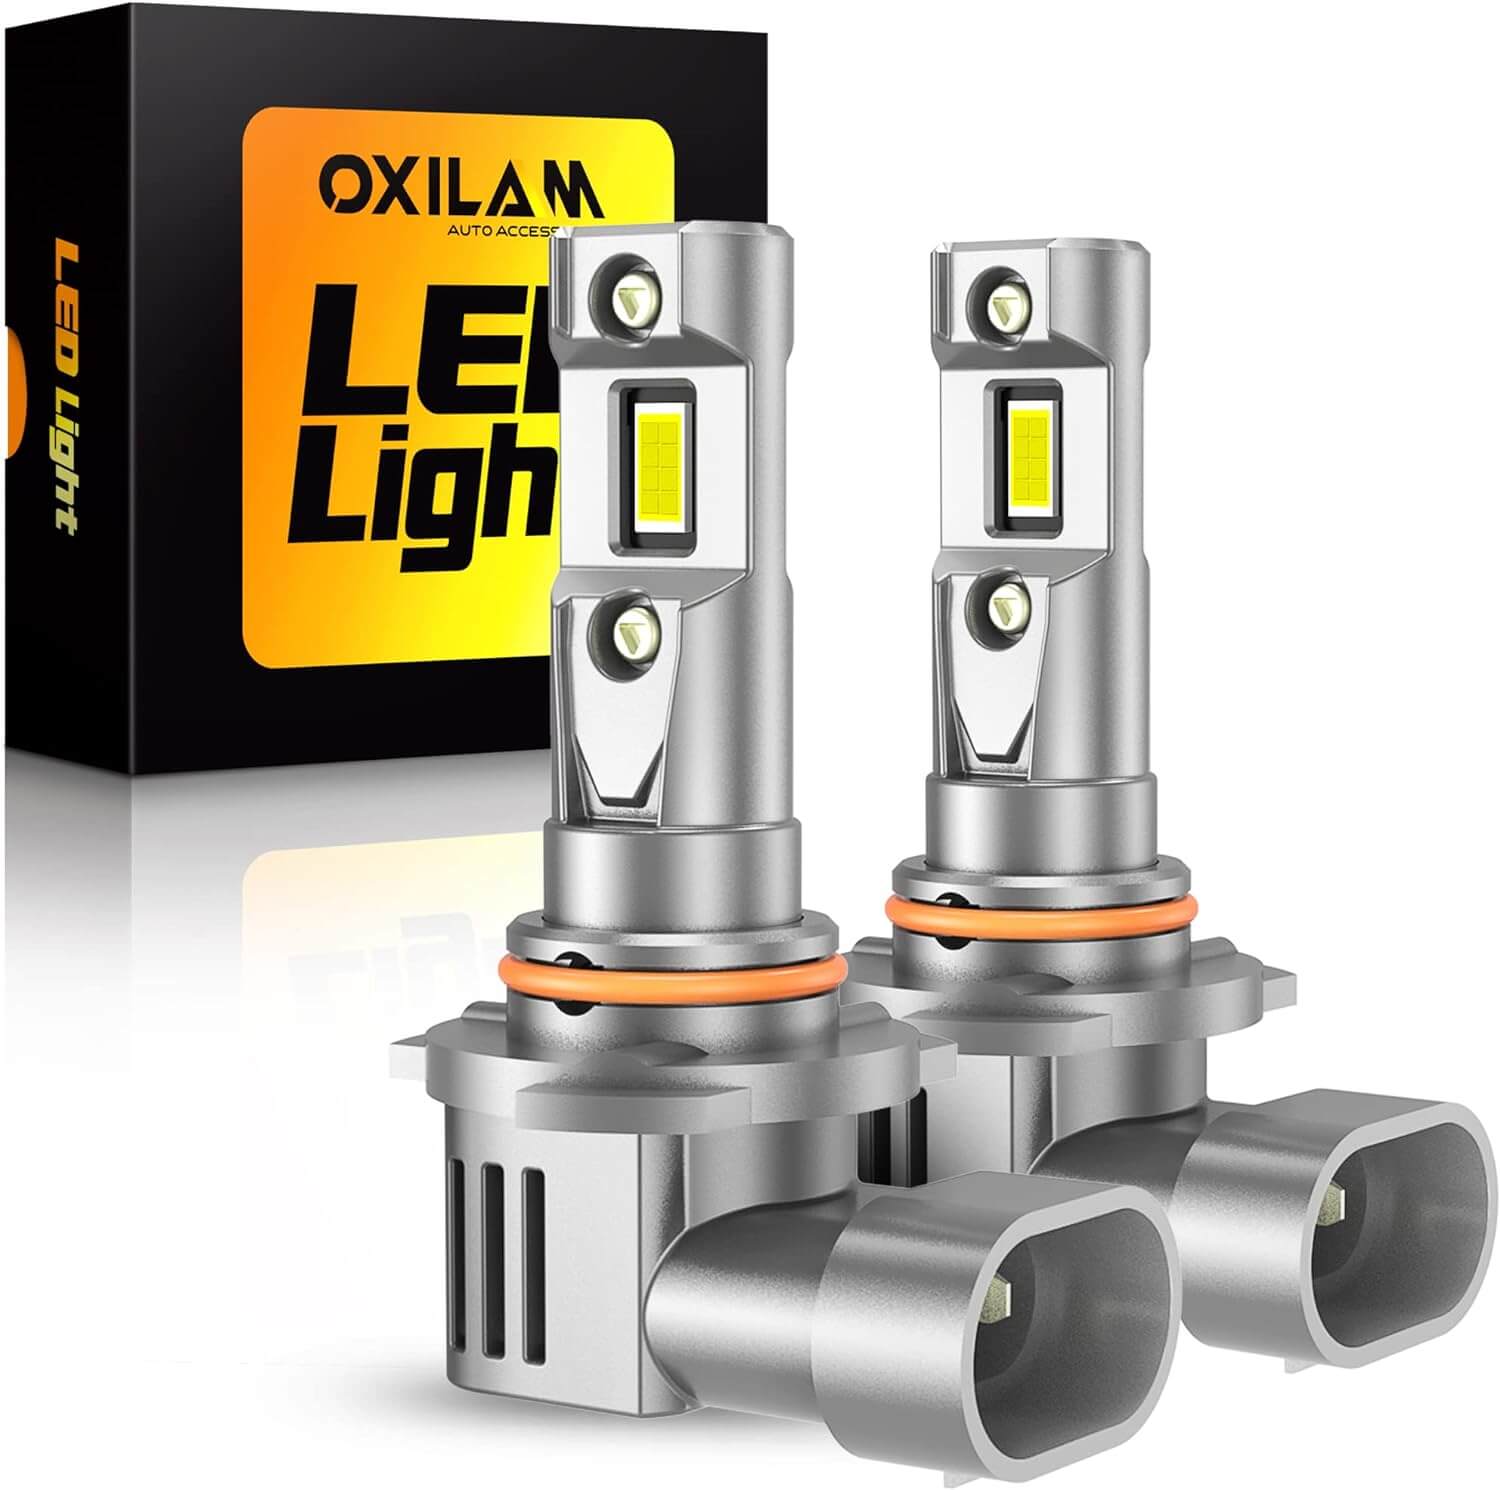 Oxilam Motor Vehicle Lighting OXILAM 9006/HB4 Bulbs, Fog Lights 60W 20000LM 6500K Cool White